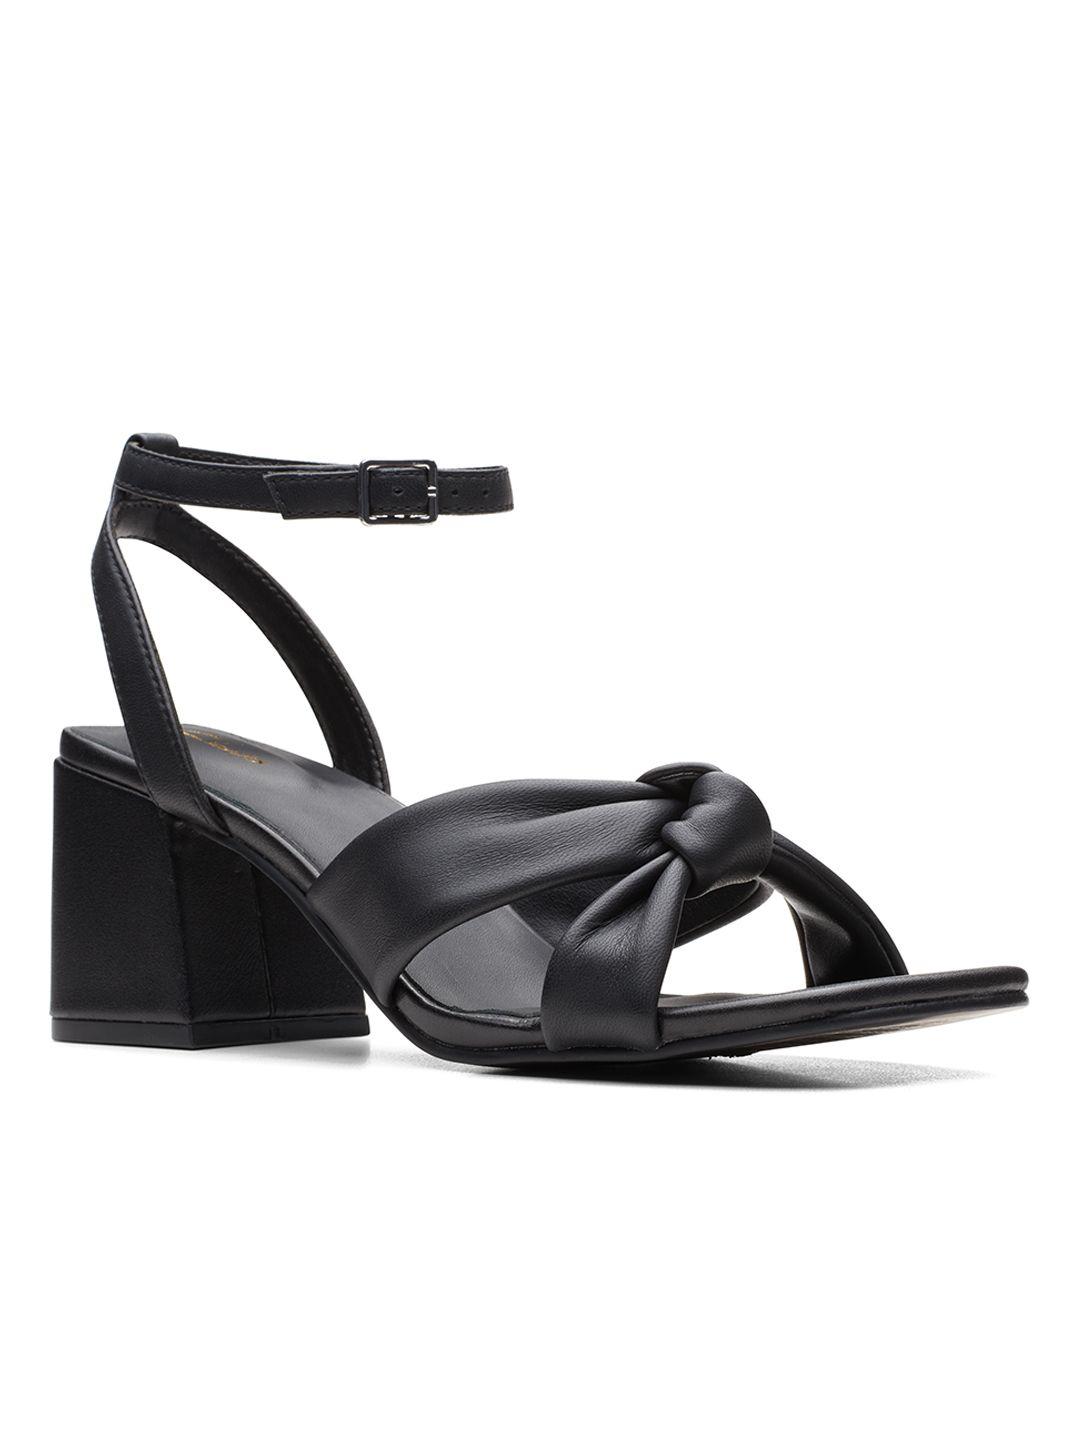 clarks-women-black-solid-leather-block-sandals